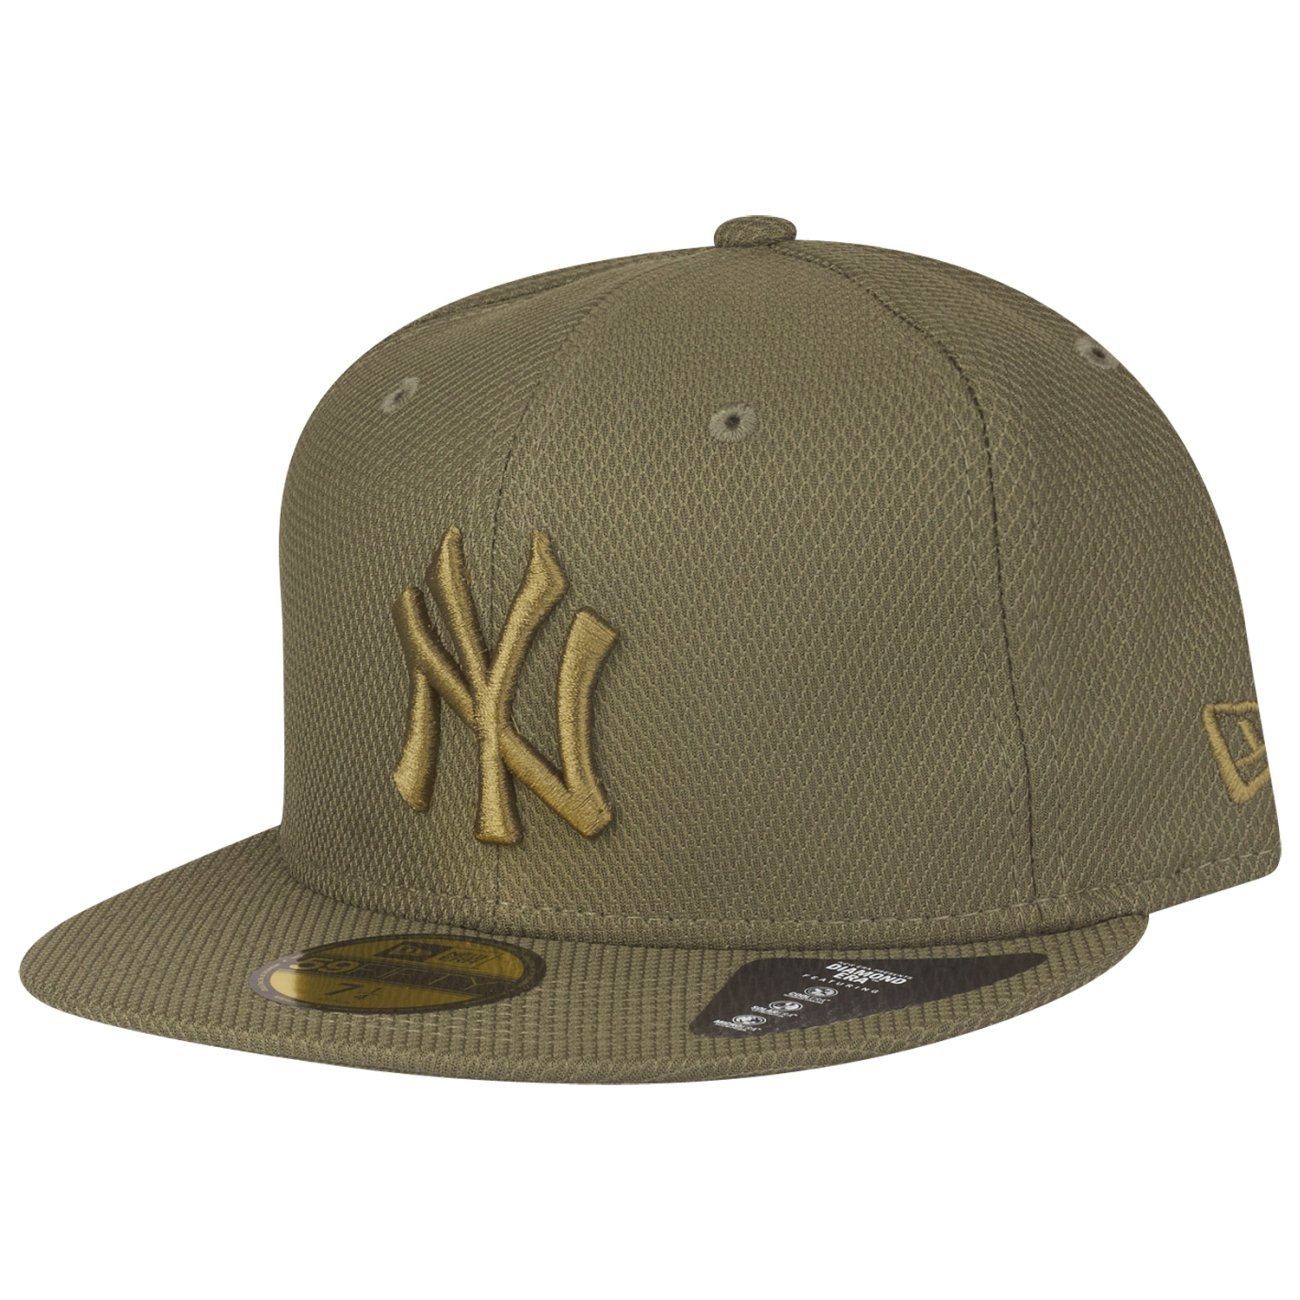 New Era Fitted Cap 59Fifty DIAMOND York New Yankees